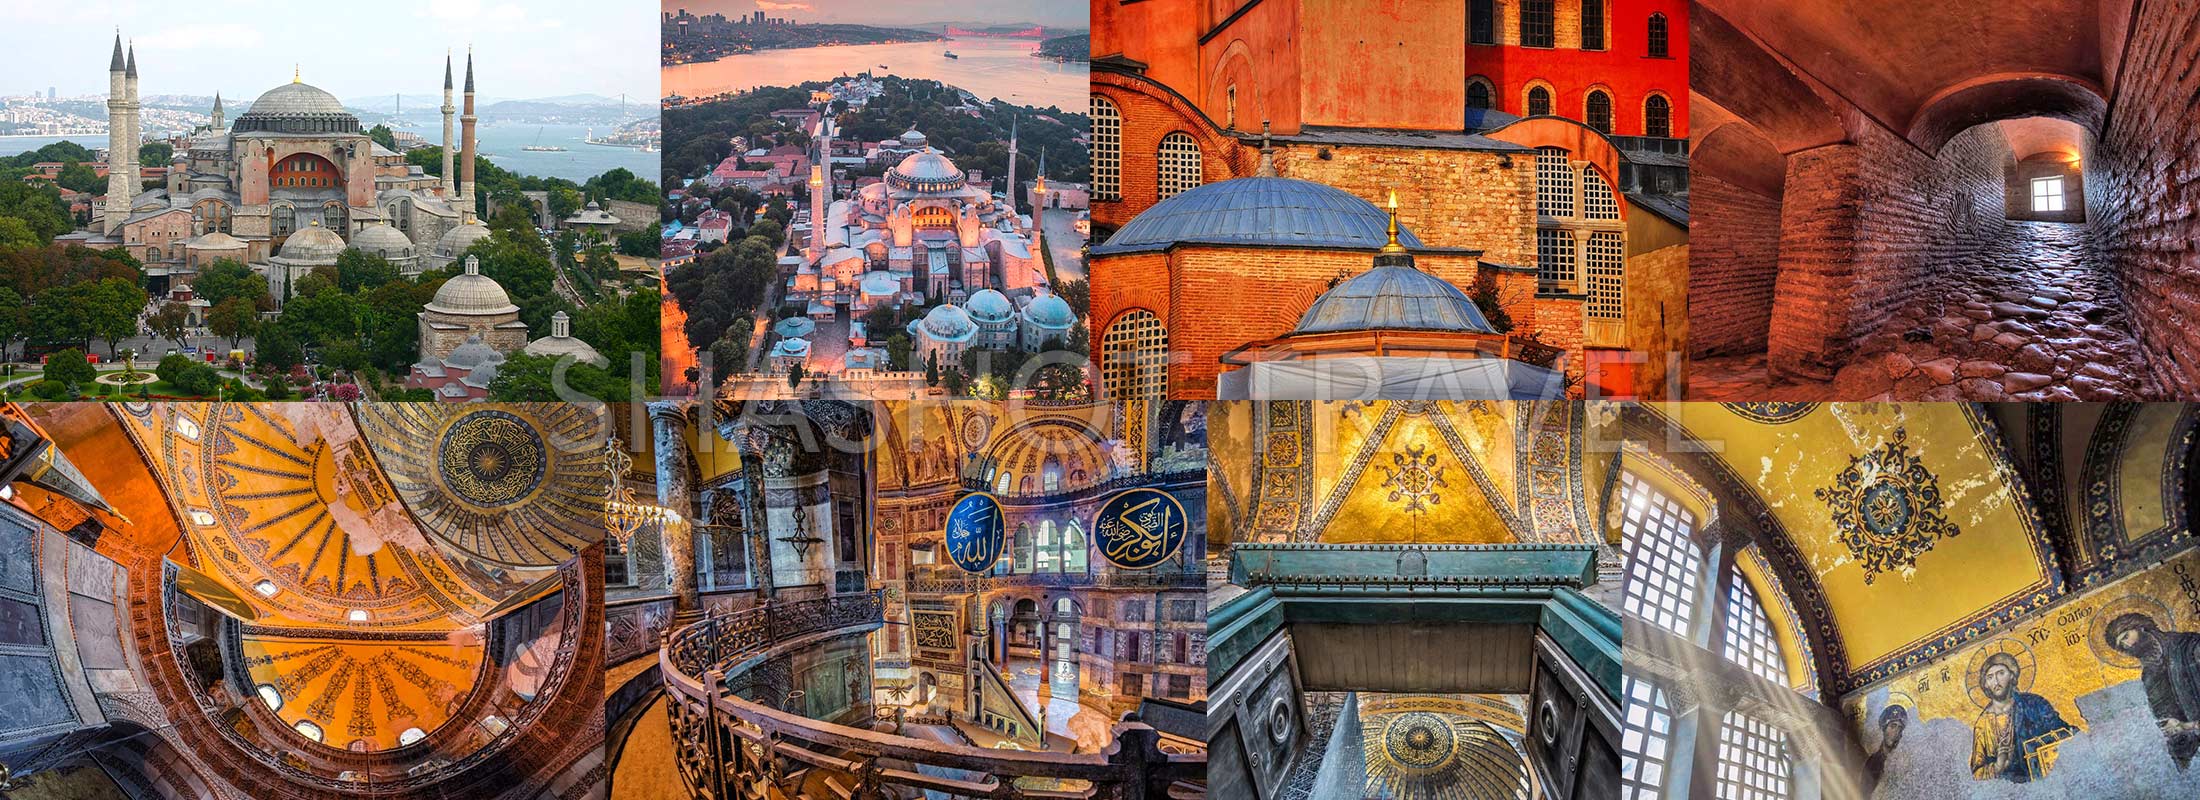 hagia-sophia-museum-istanbul-turkey-türkiye-shashot-travel